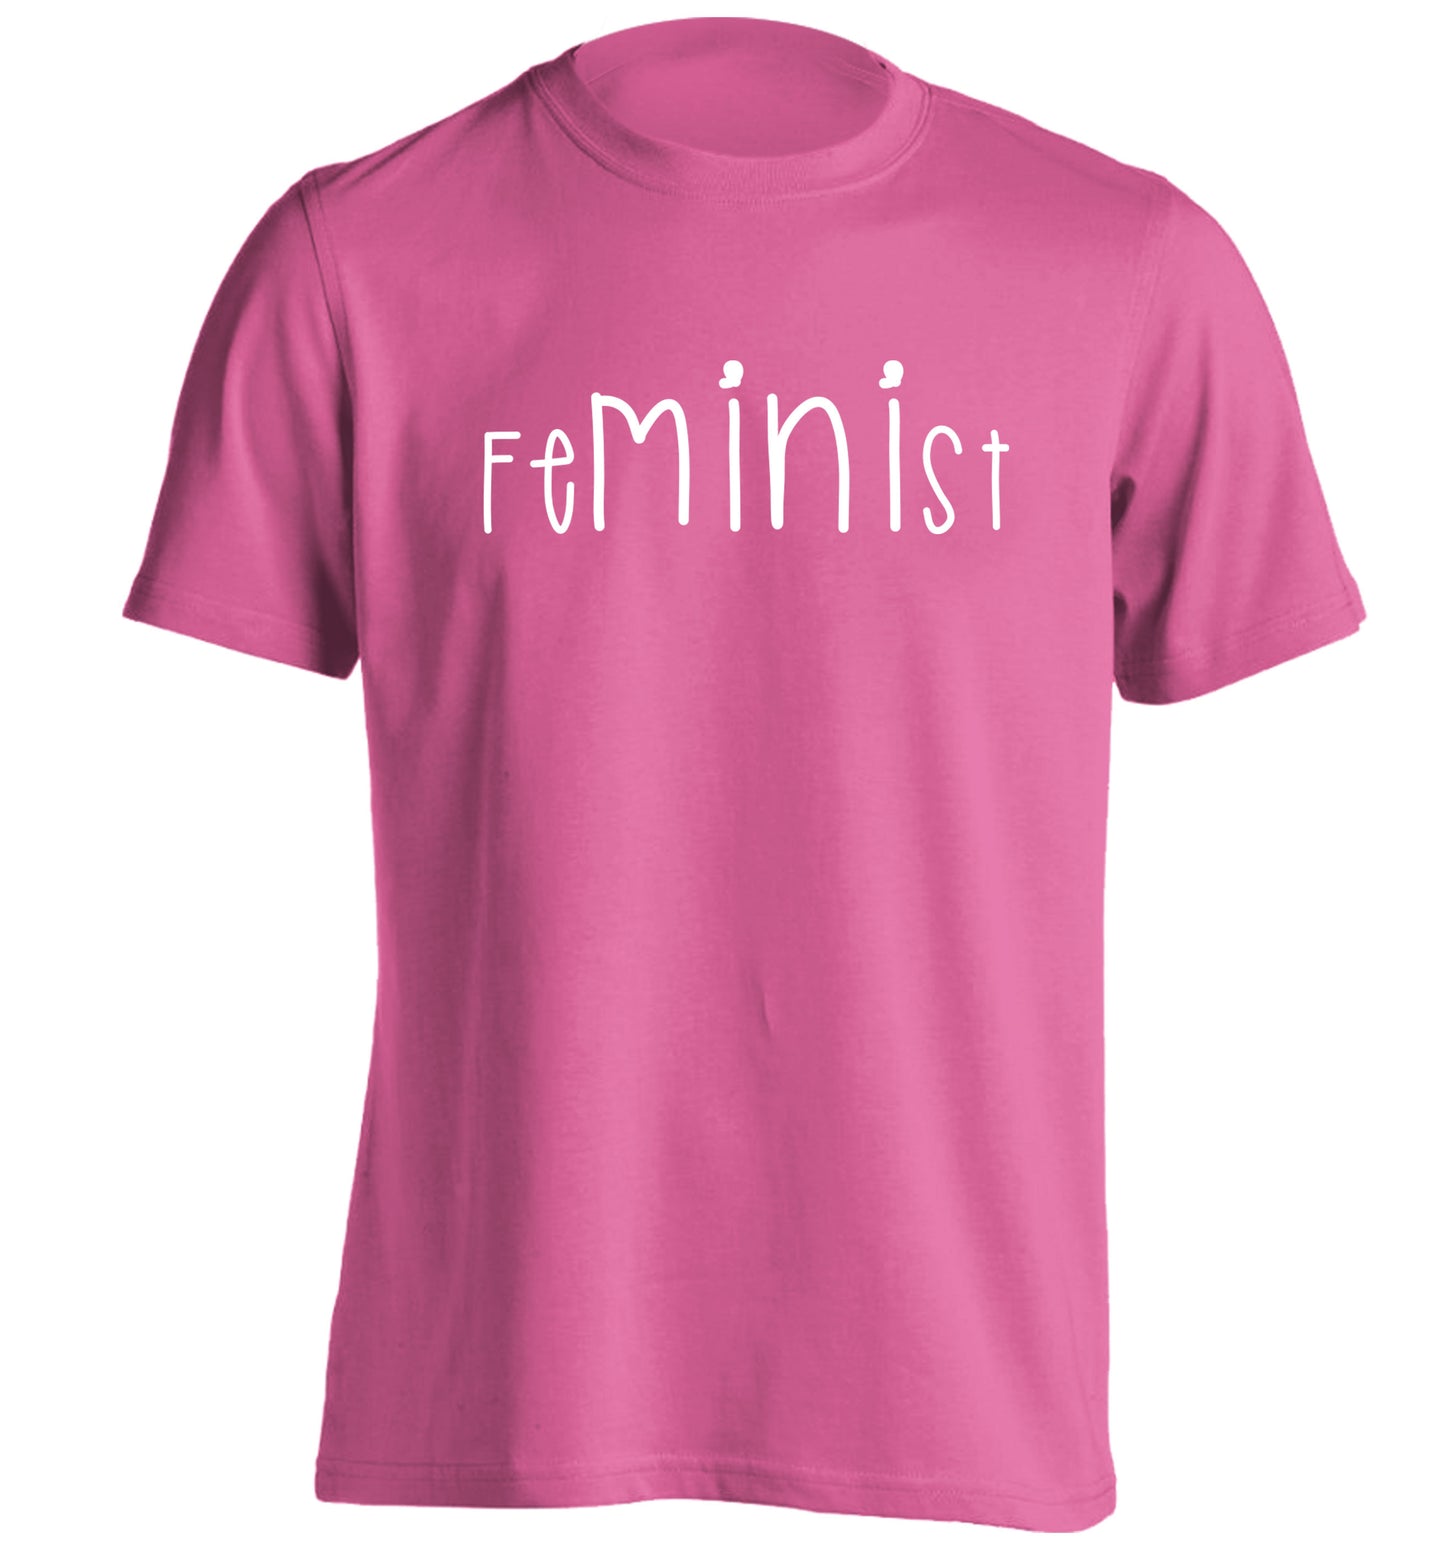 FeMINIst adults unisex pink Tshirt 2XL